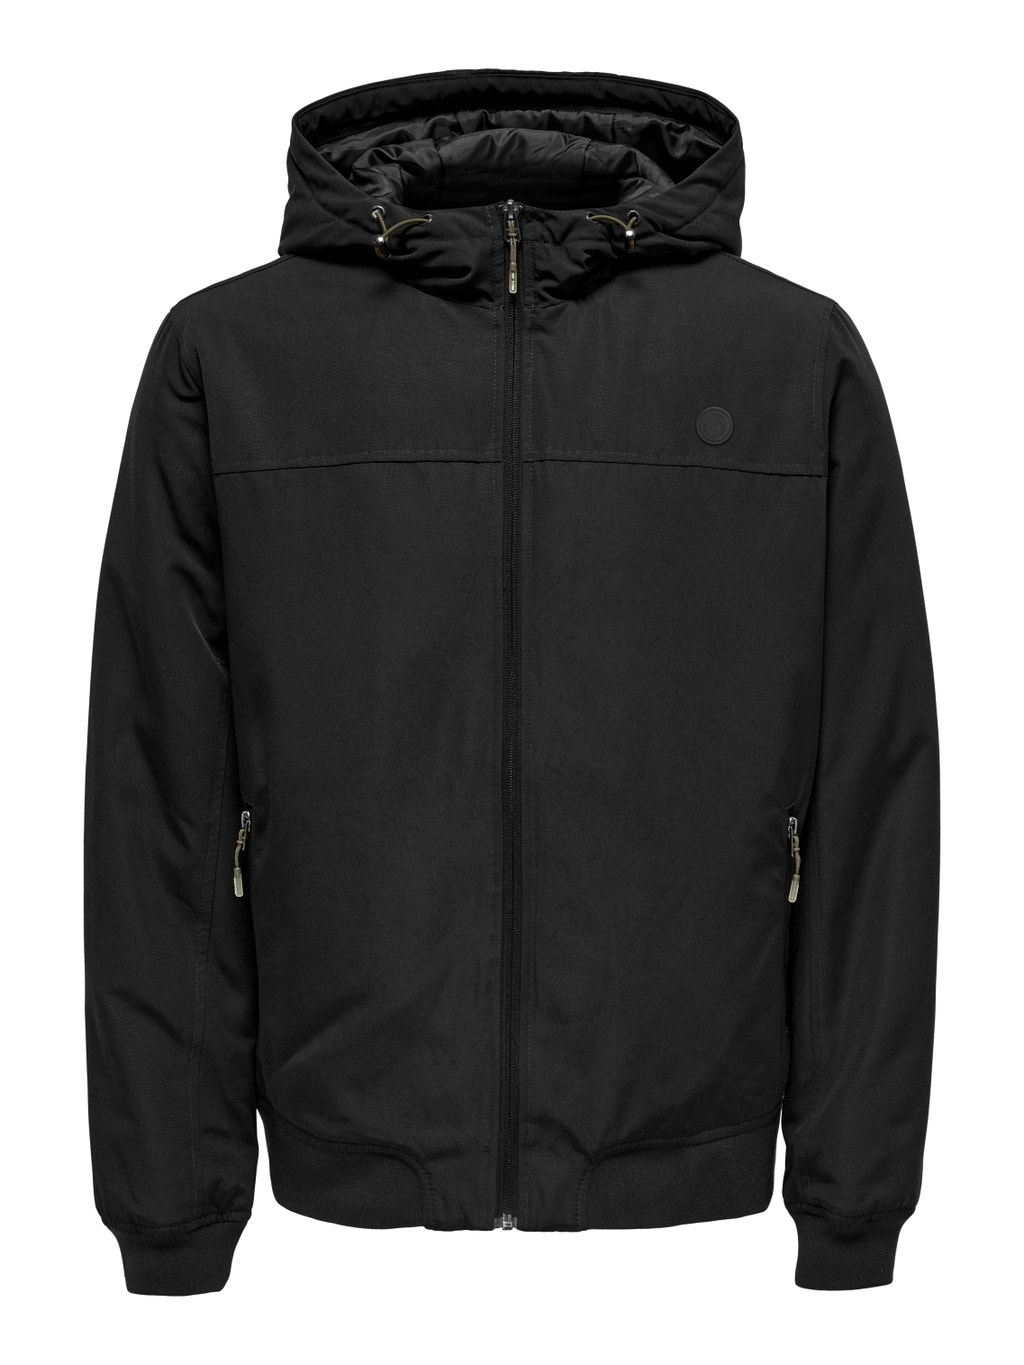 Solid color jacket | Black | ONLY & SONS®